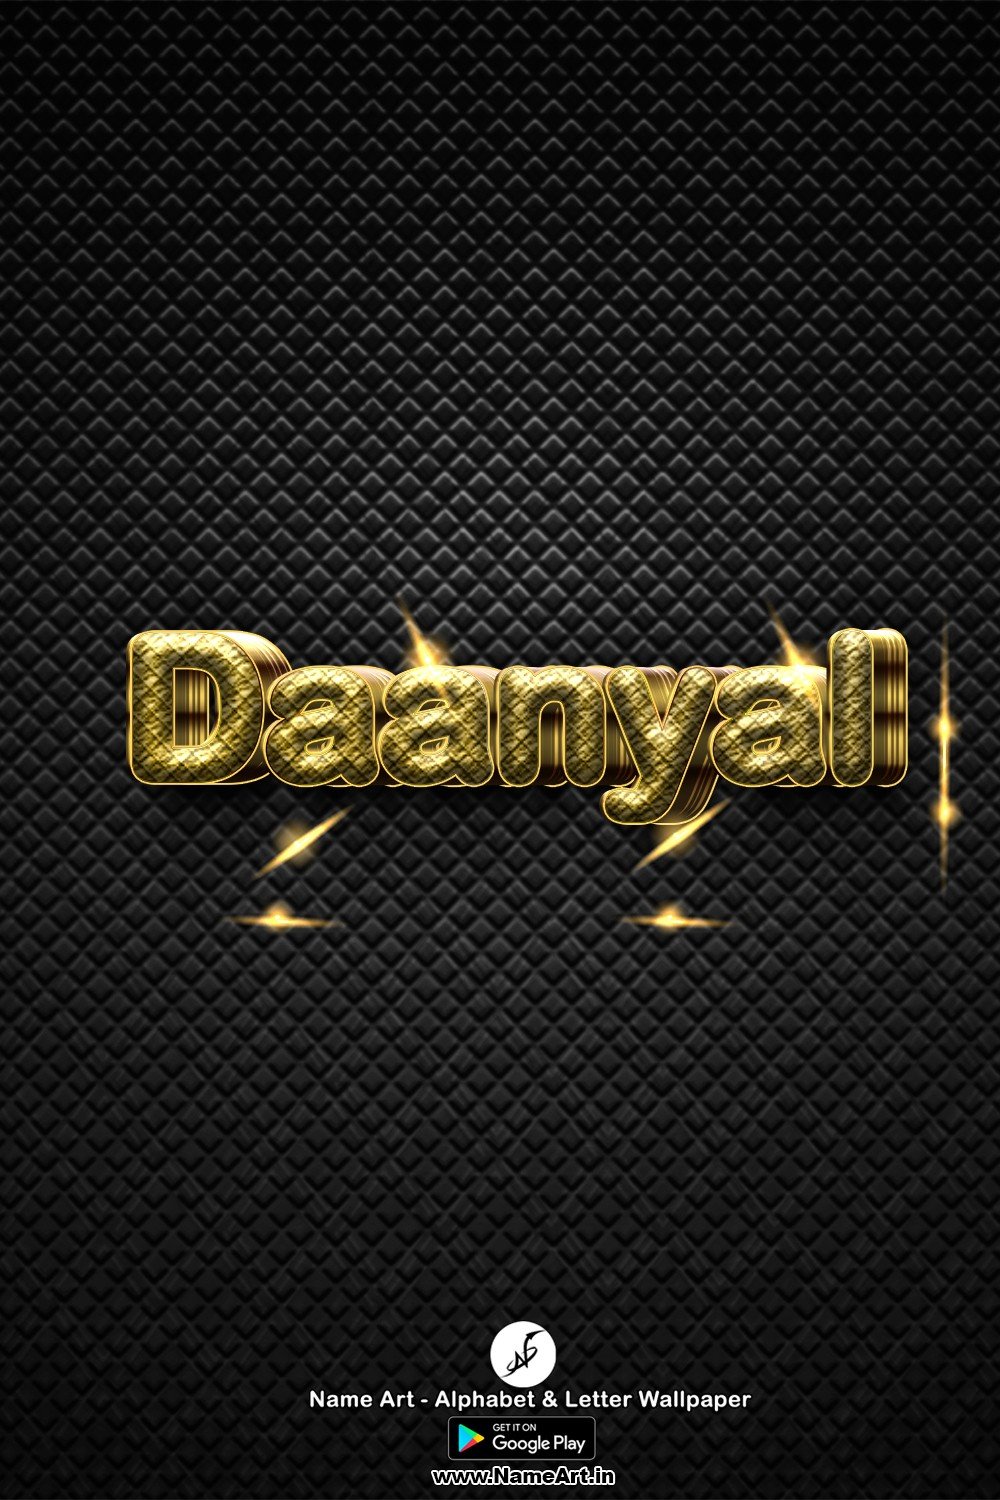 Daanyal | Whatsapp Status Daanyal | Happy Birthday Daanyal !! | New Whatsapp Status Daanyal Images |